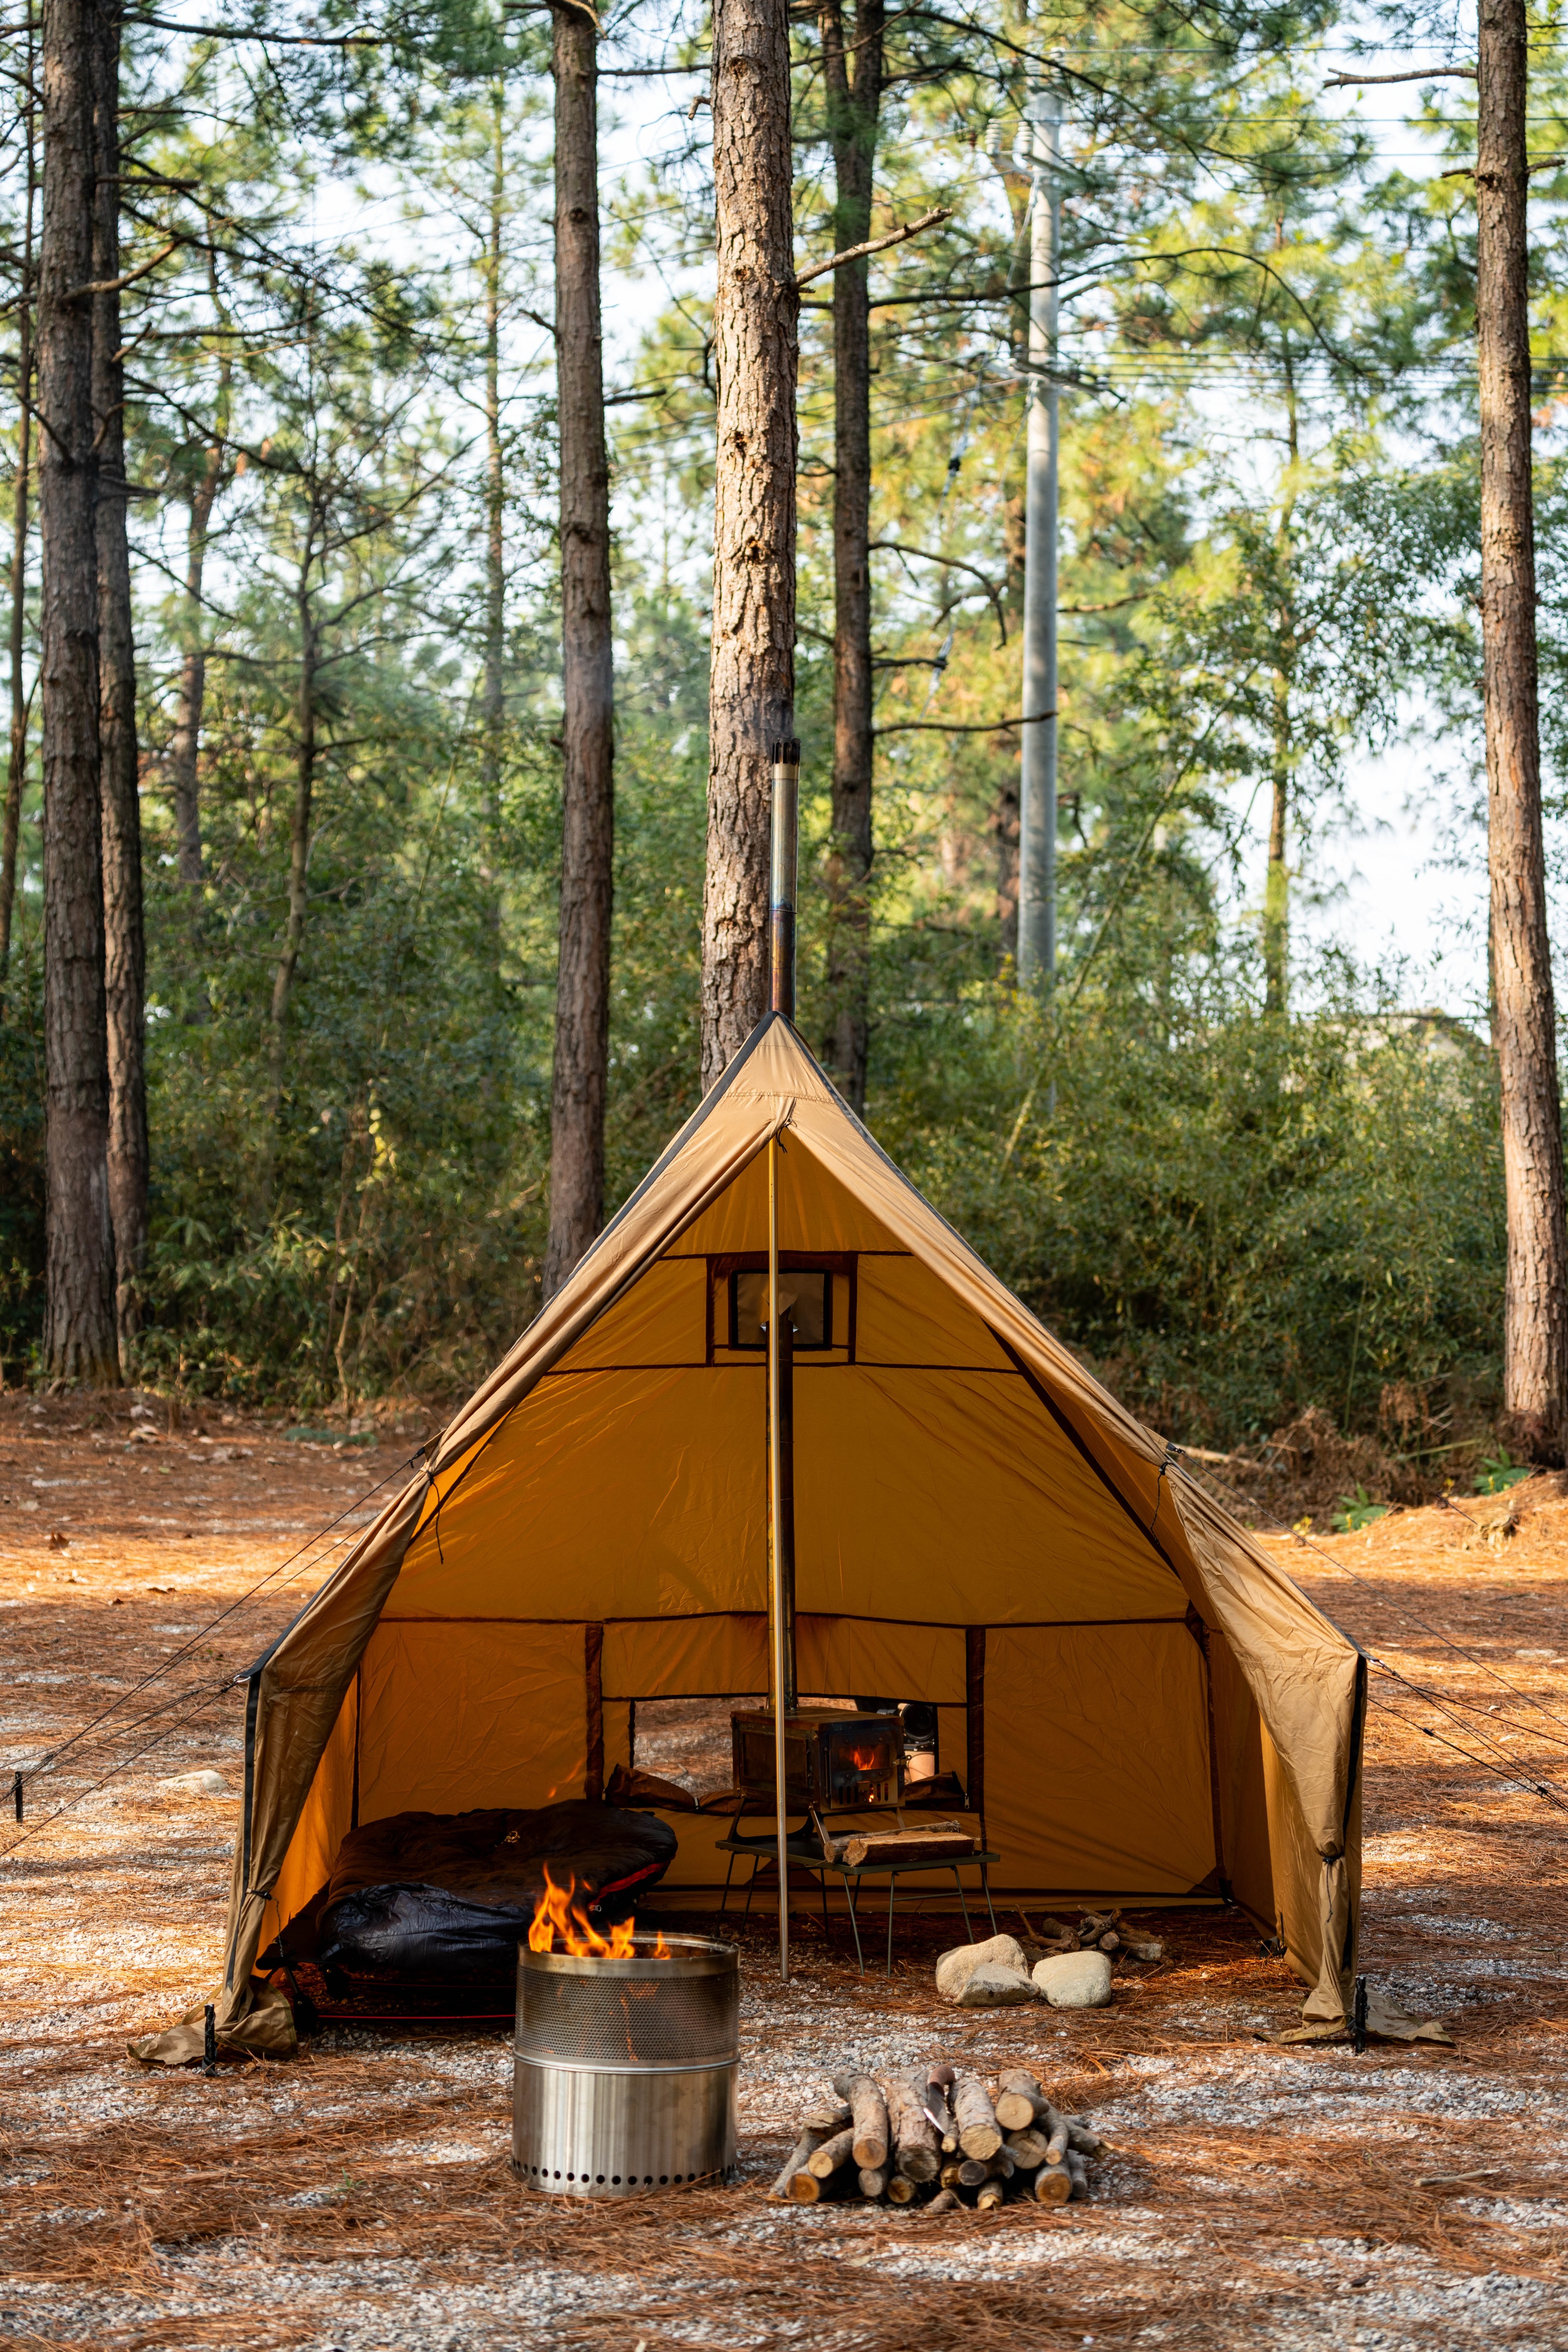 Fireyurt Yurt Hot Tent for Four-Season Camping